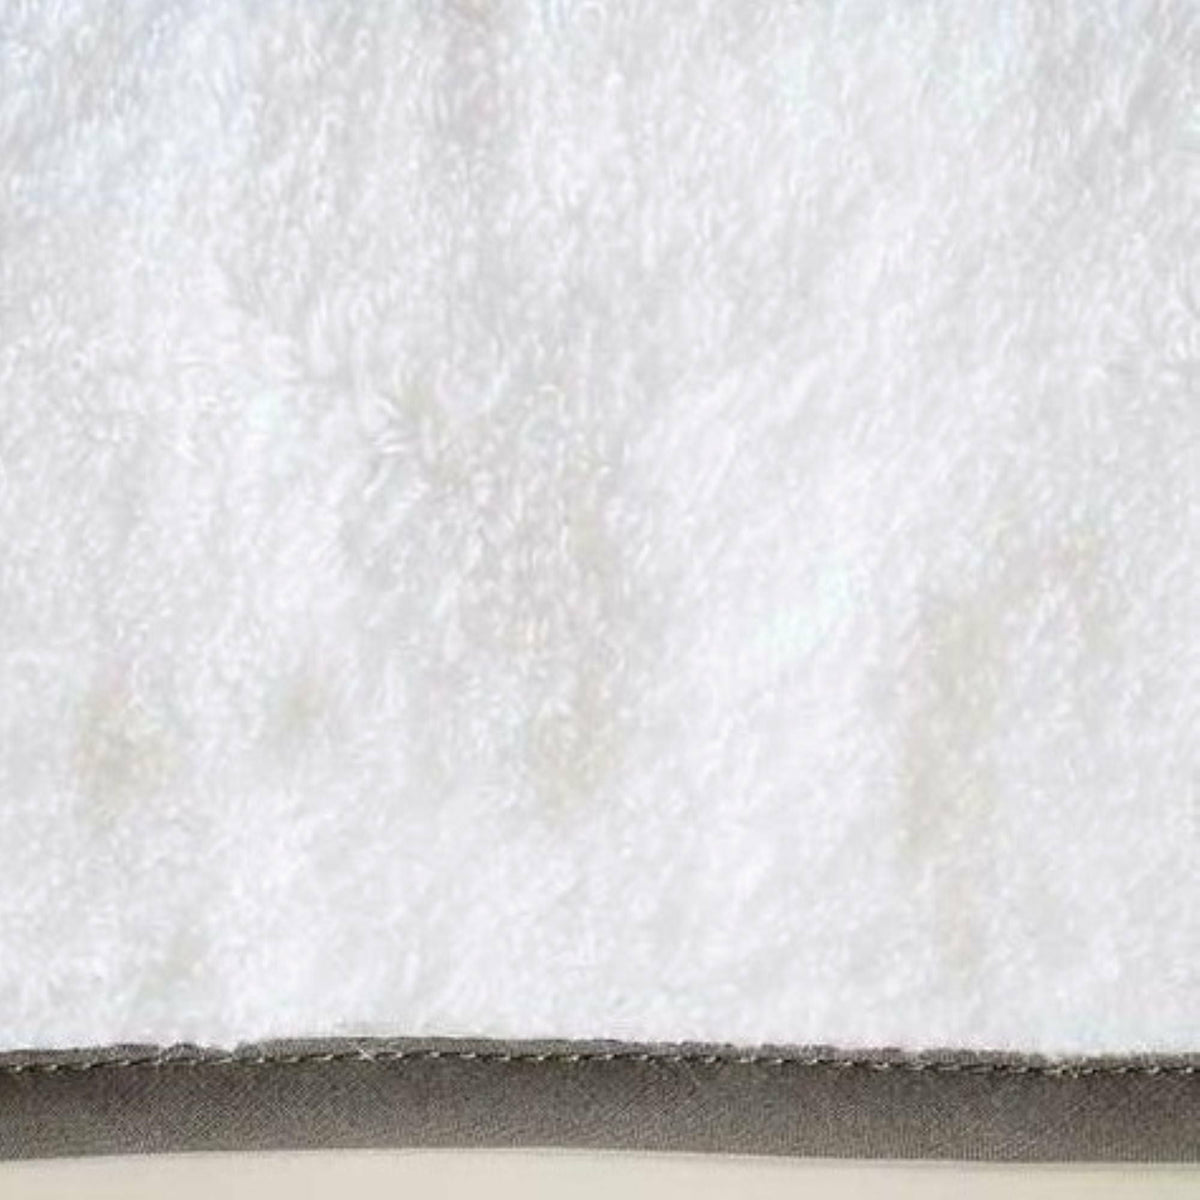 Home Treasures Bodrum Bath Towel Swatch White/Grisaglia Gray Fine Linens